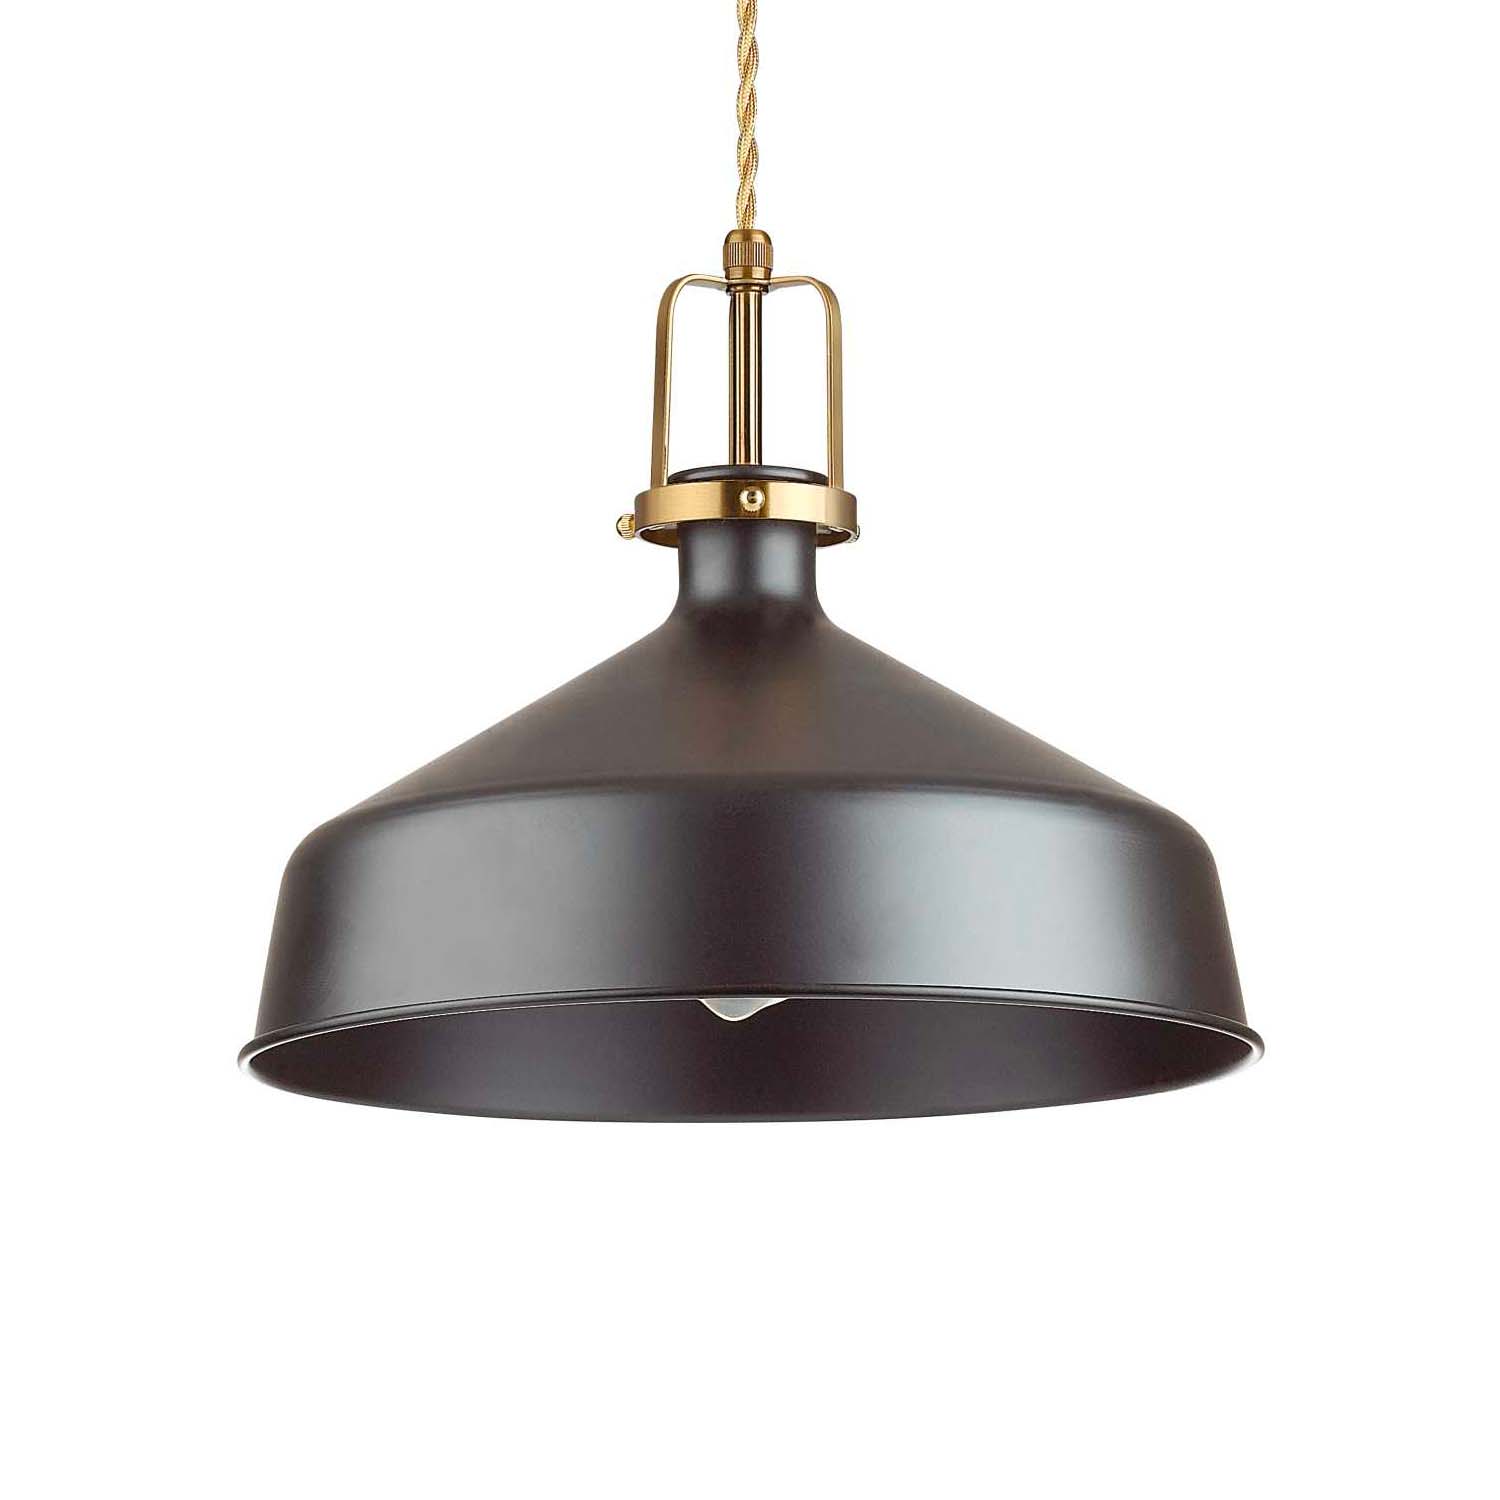 ERIS - Dome pendant light in industrial black or white steel